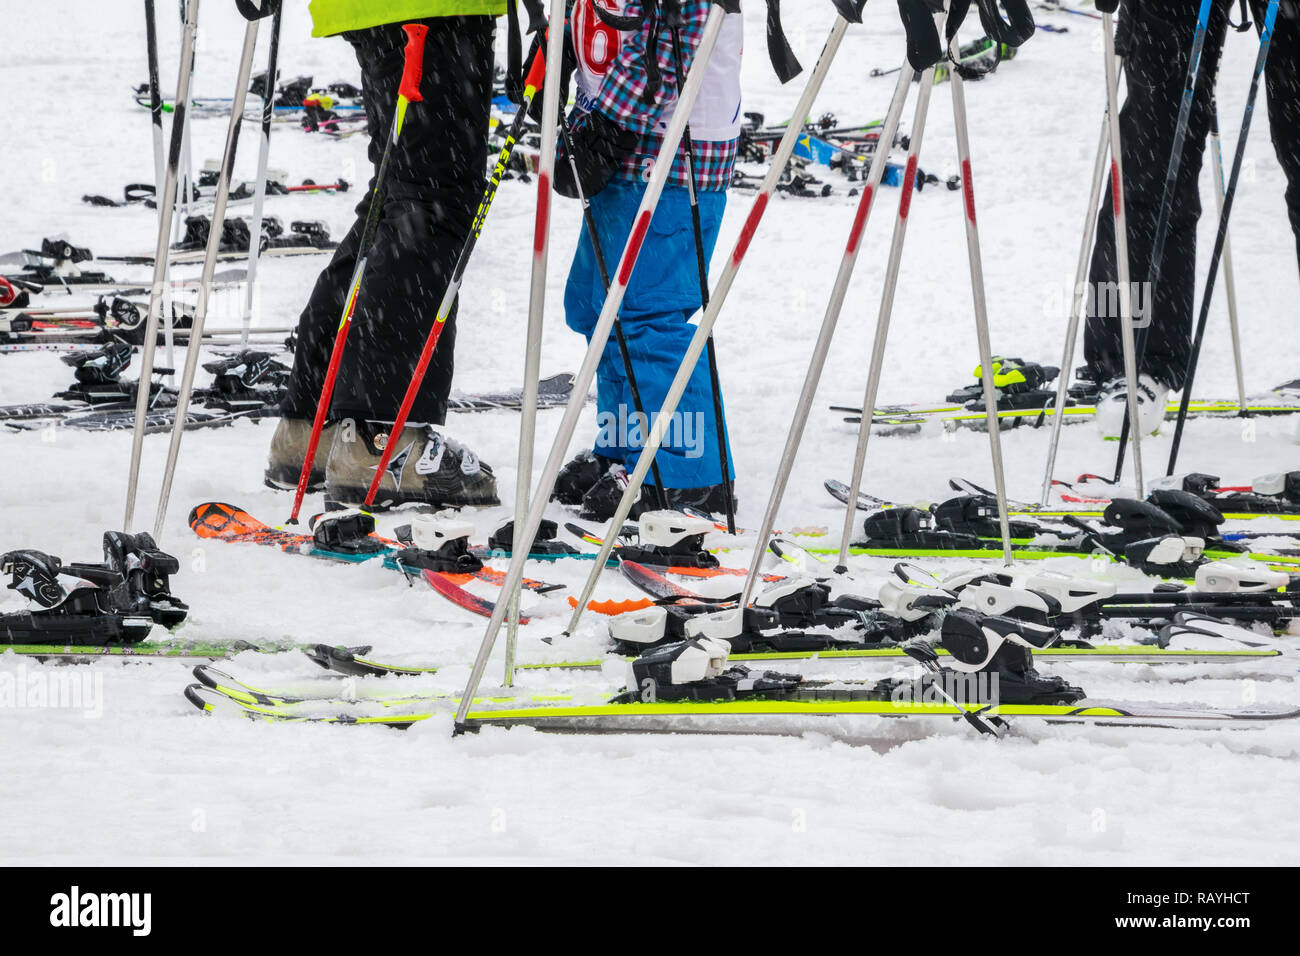 many ski poles and ski with some legs on snow Stock Photo